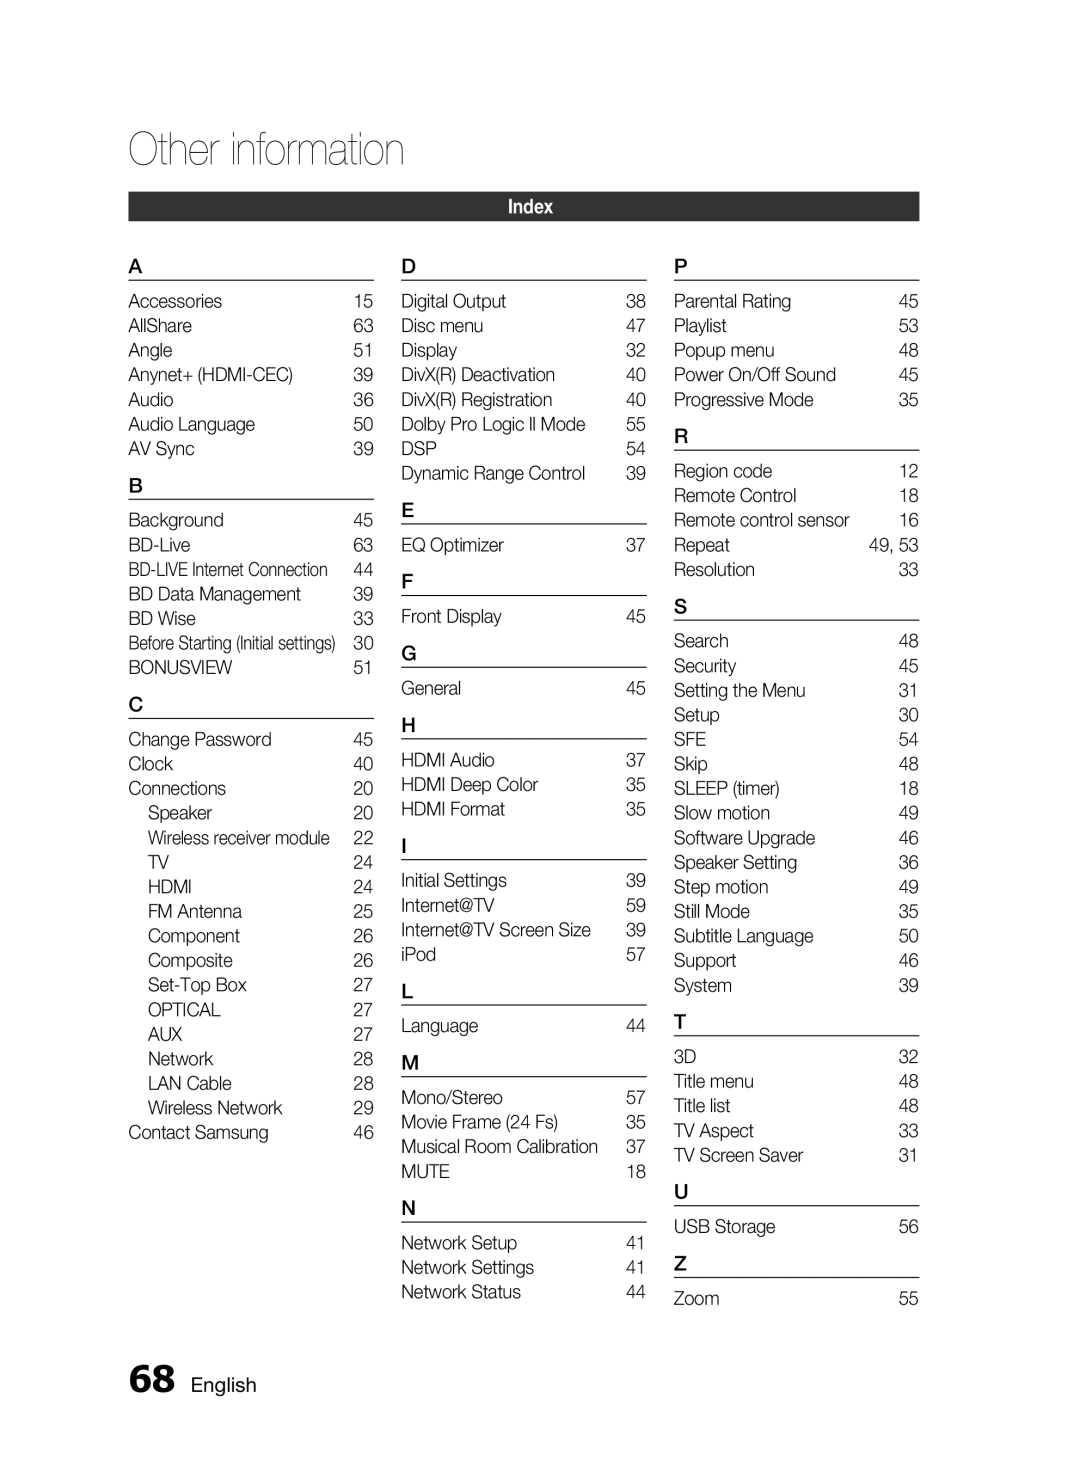 Samsung C6600 user manual Index, Other information 